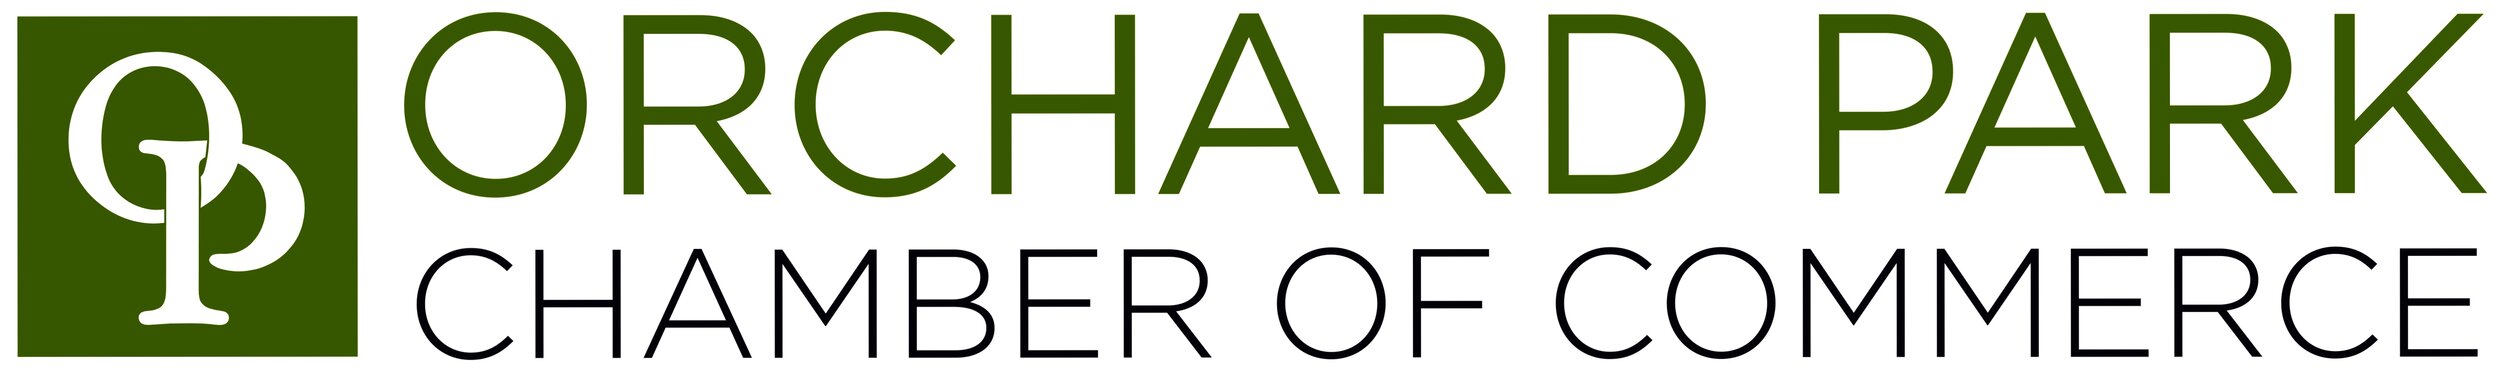 OrchardPark_ChamberofCommerce_Logo.jpg